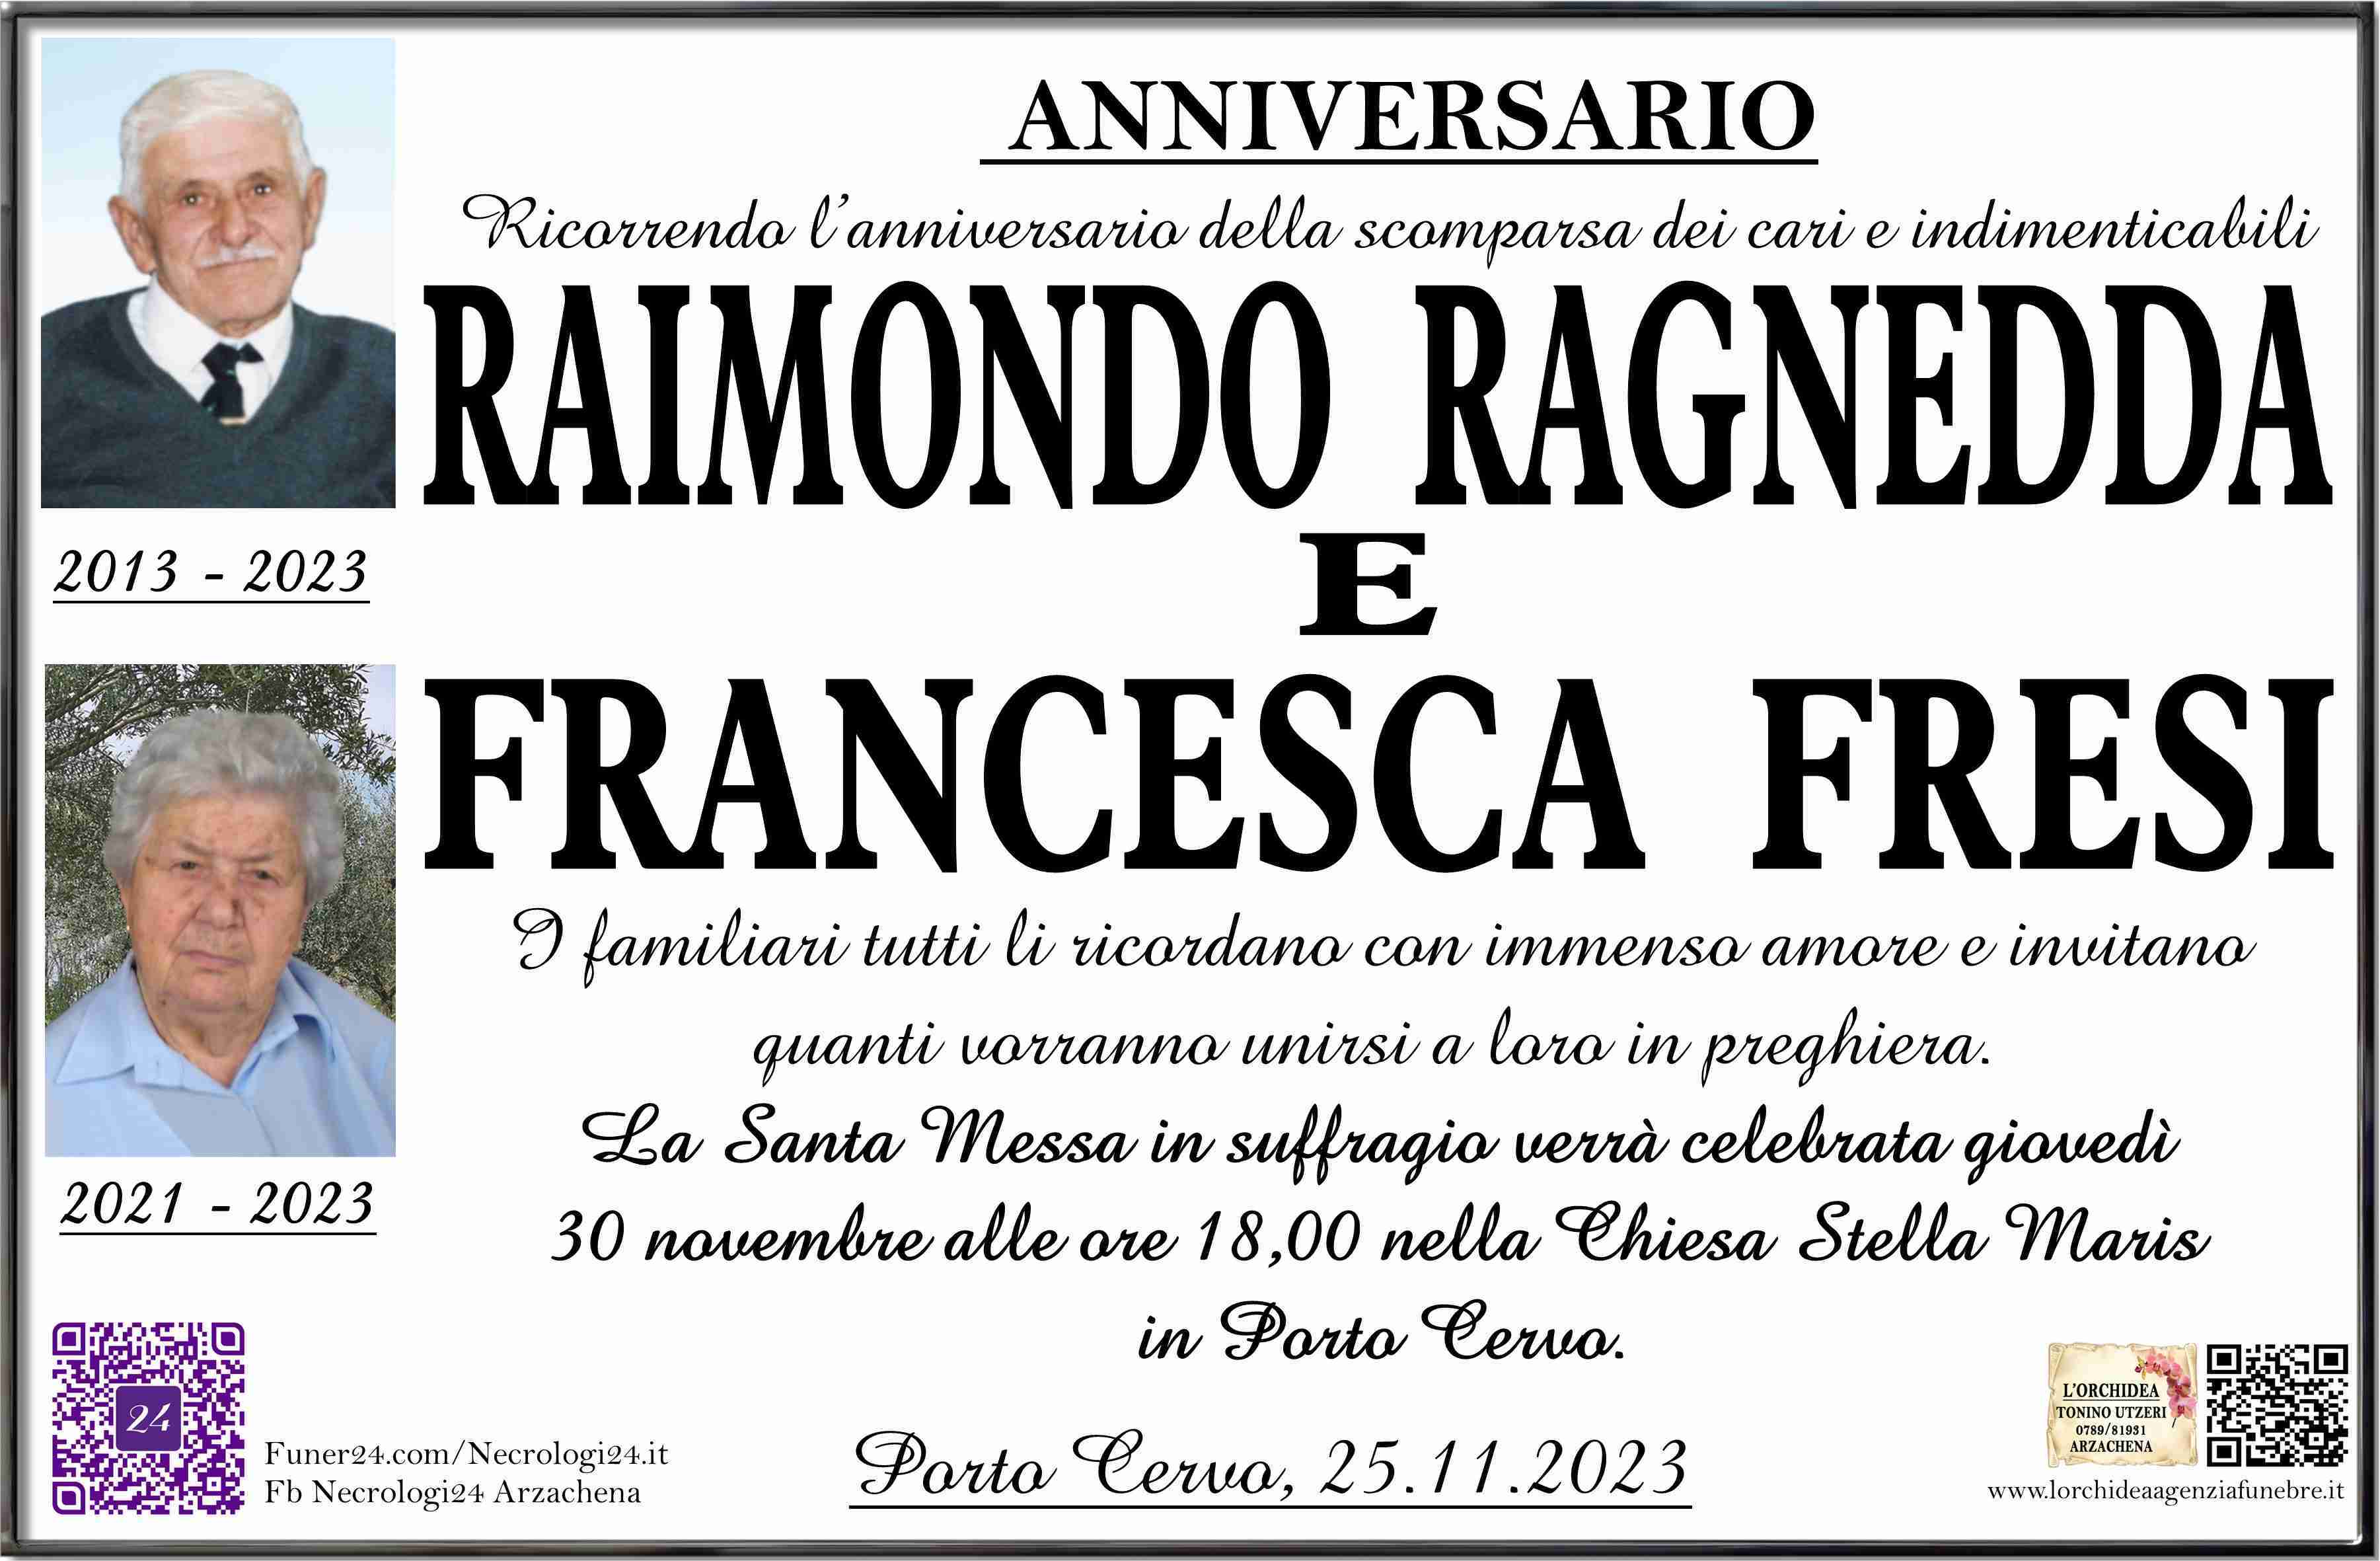 Francesca Fresi